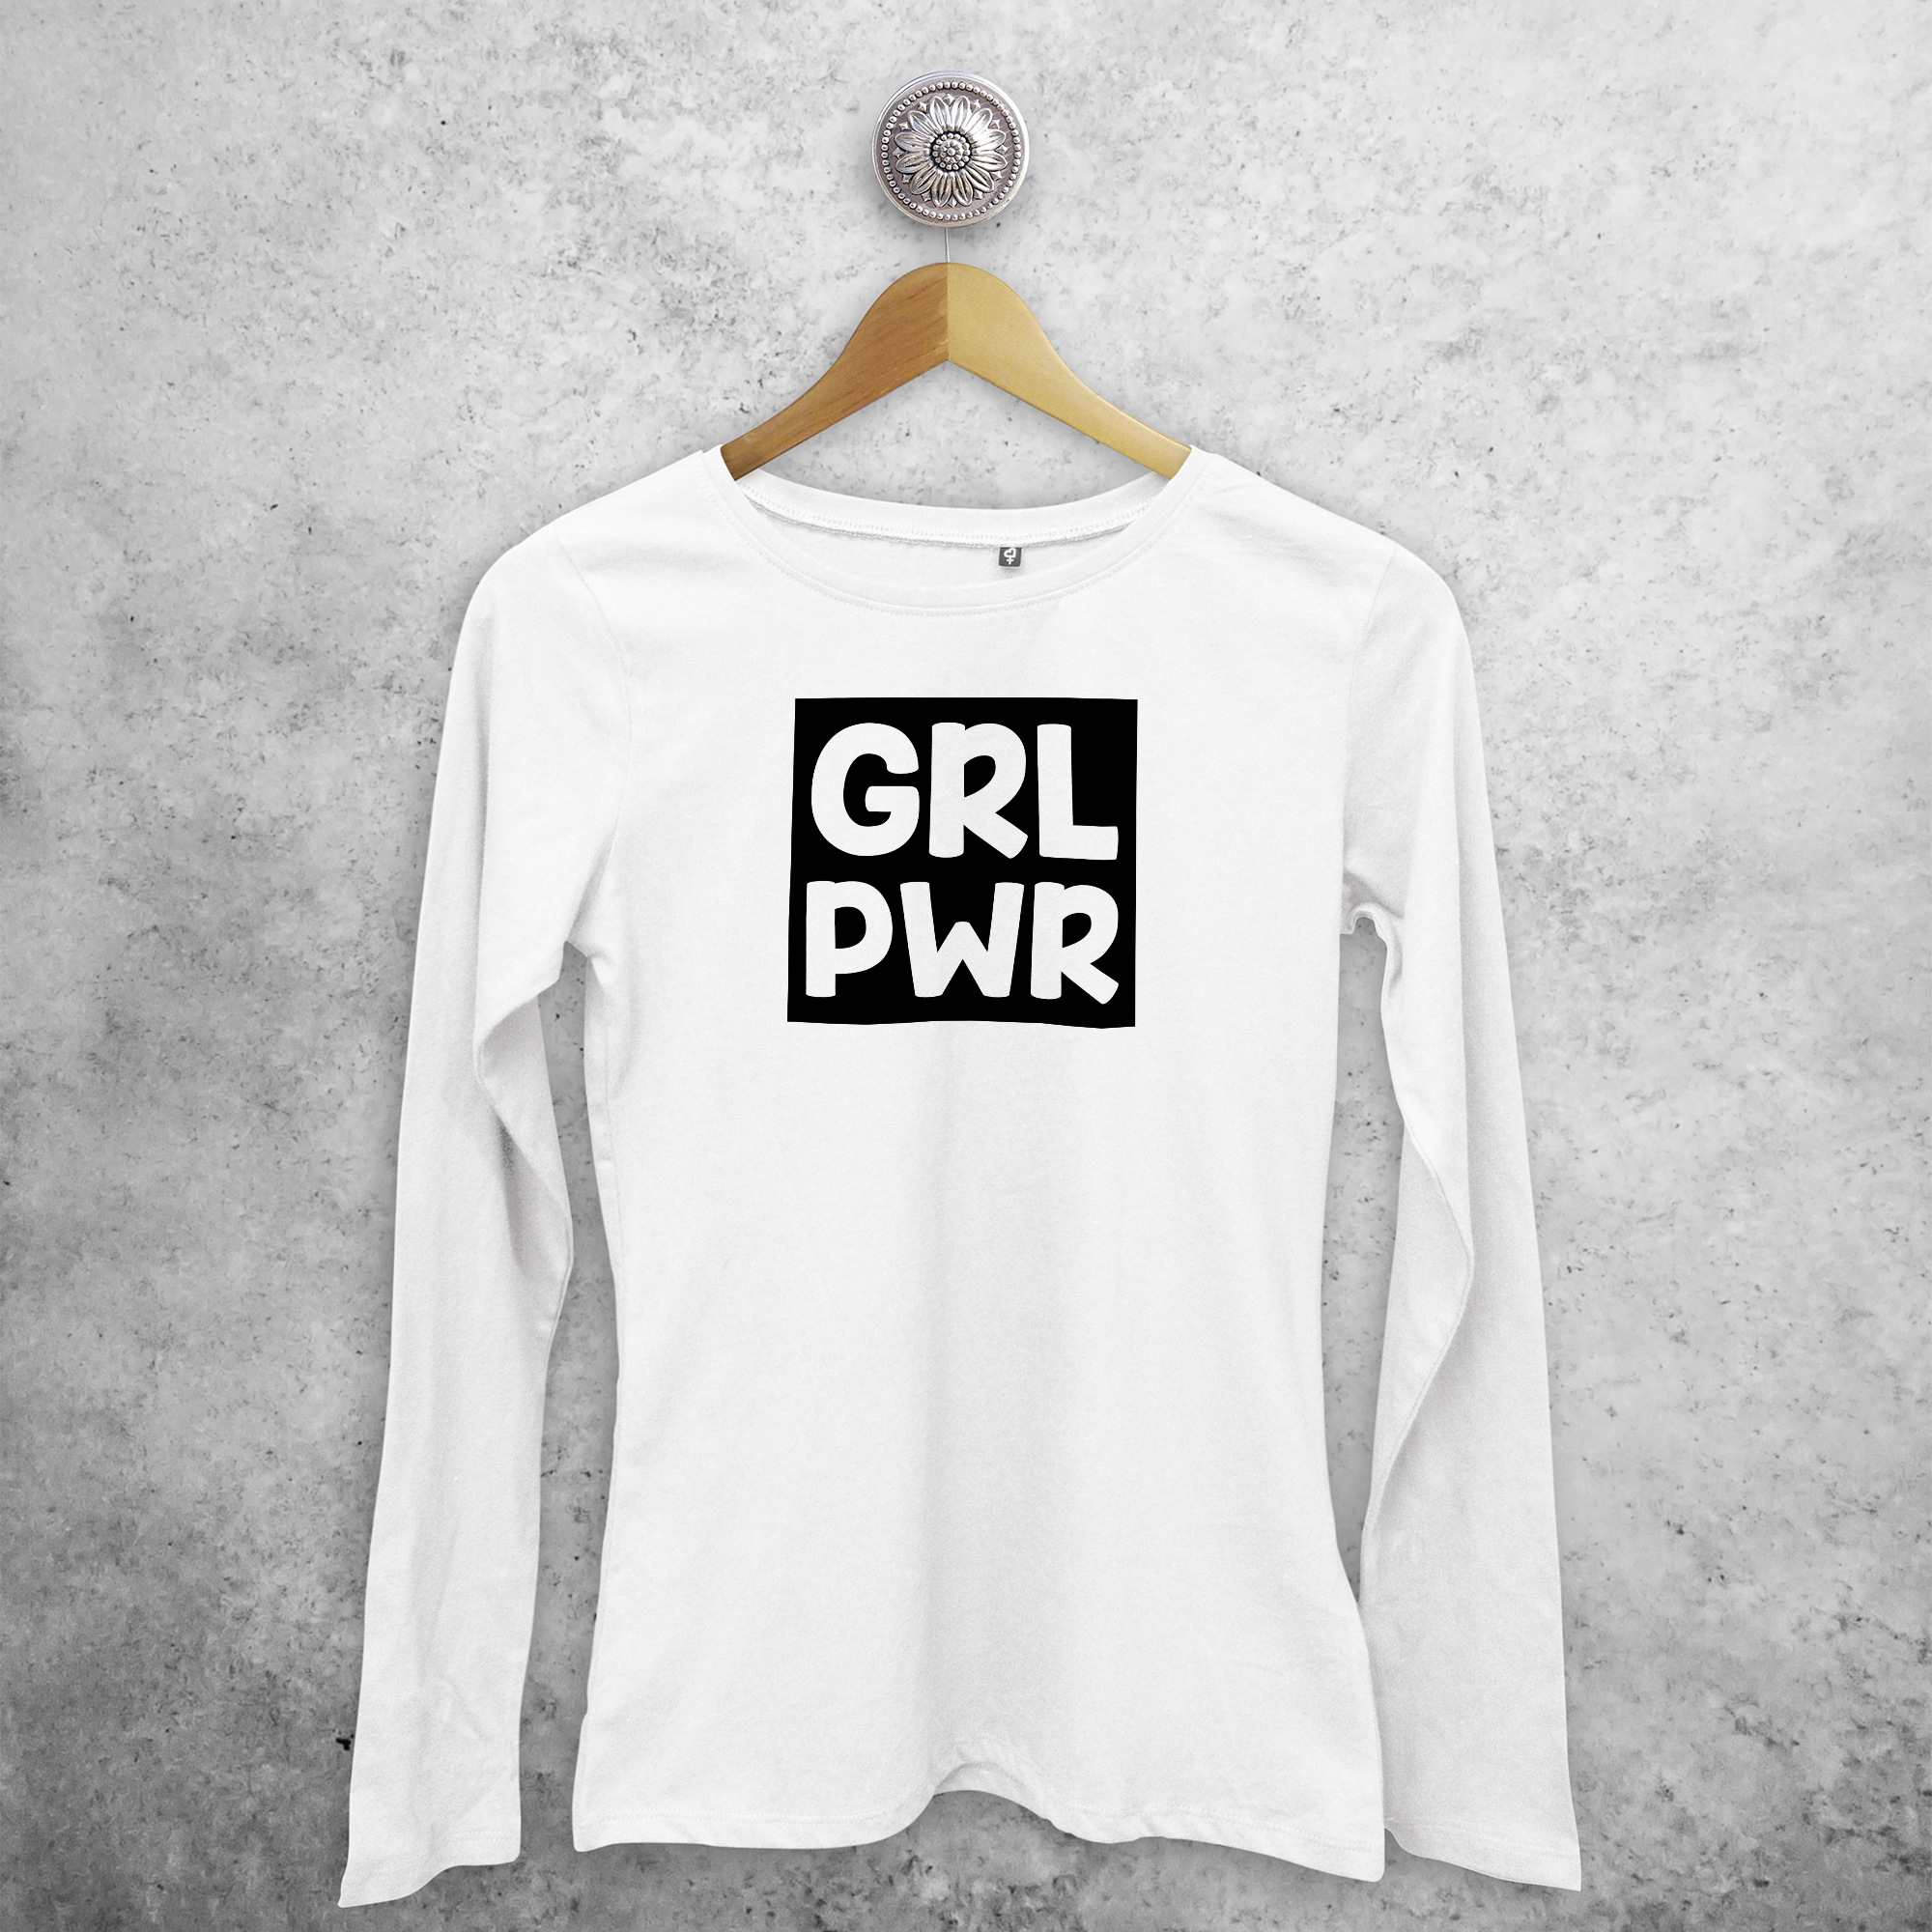 'GRL PWR' adult longsleeve shirt